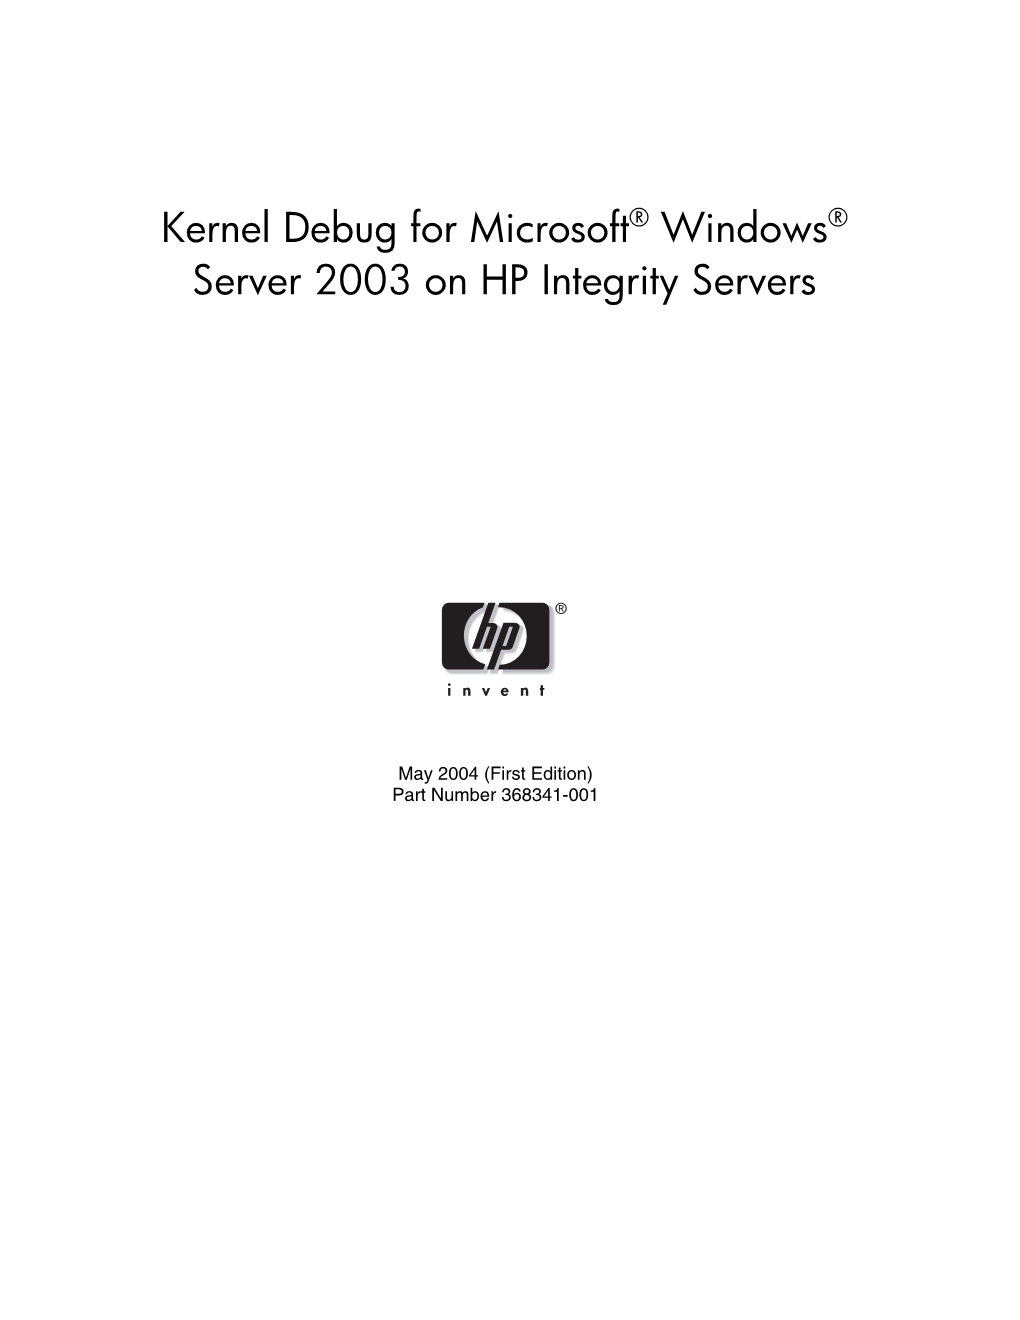 Kernel Debug for Microsoft® Windows® Server 2003 on HP Integrity Servers